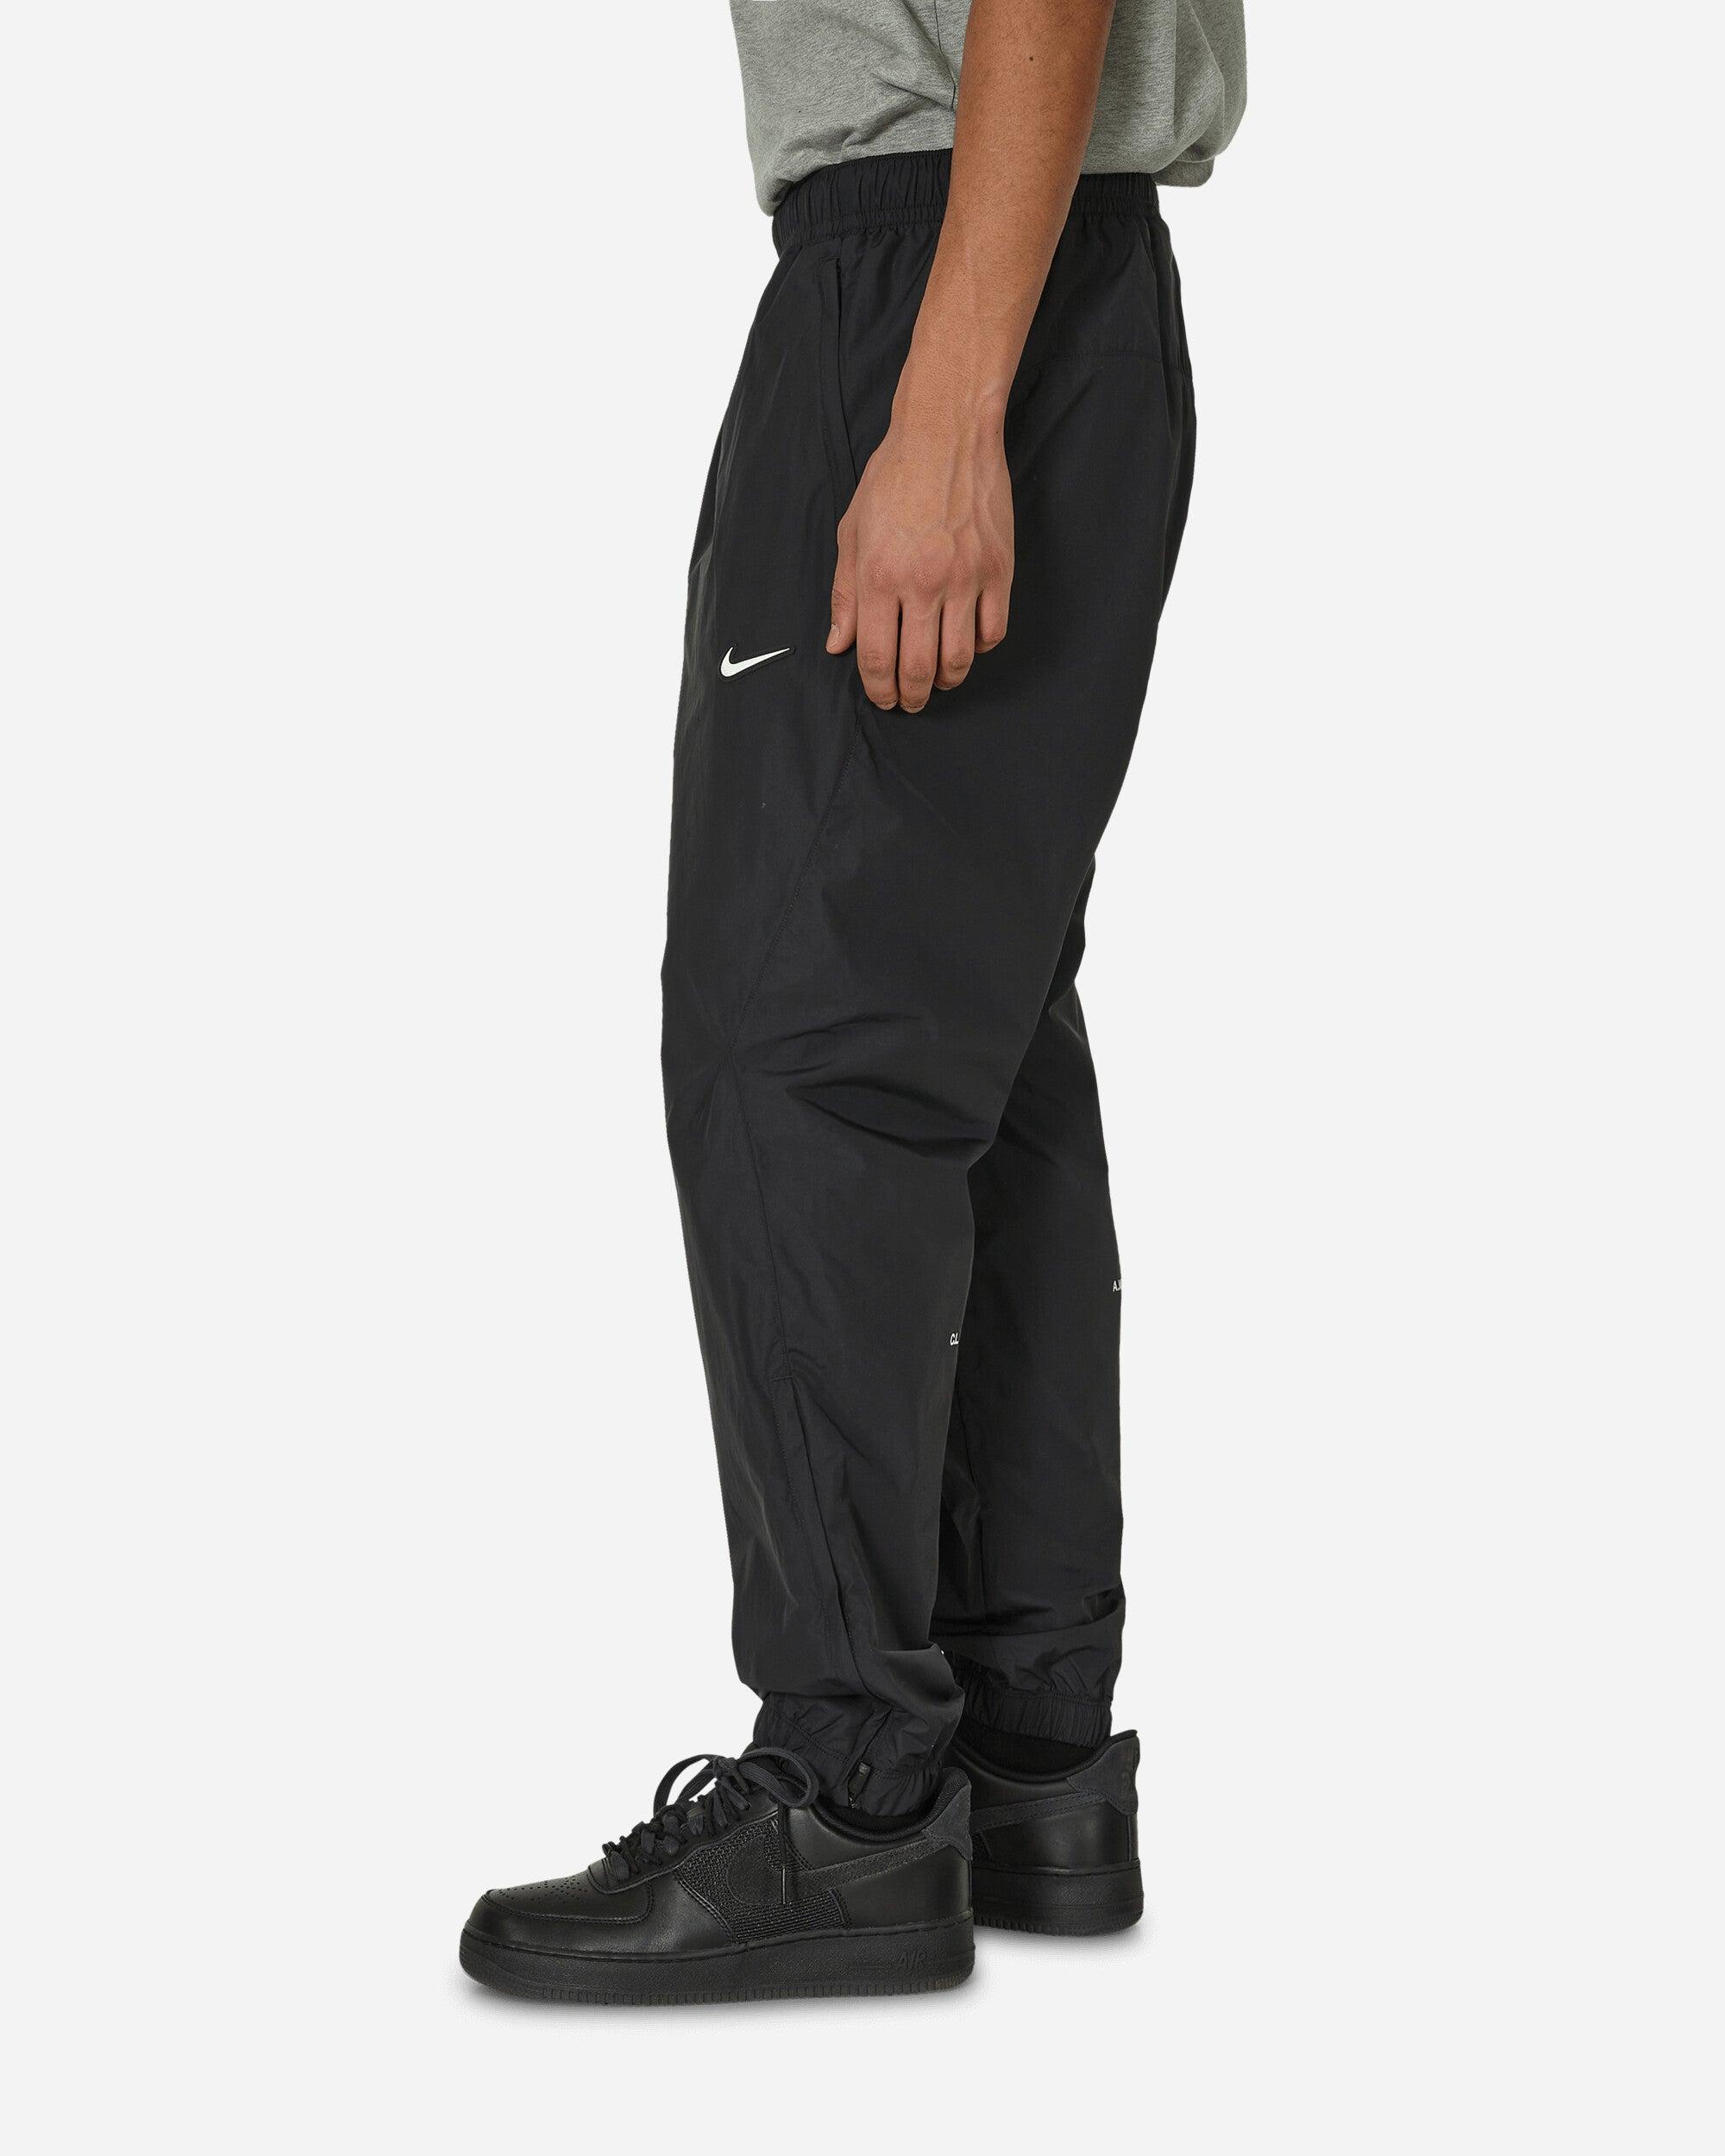 Nike NRG Woven Track Pant Black & White | END.